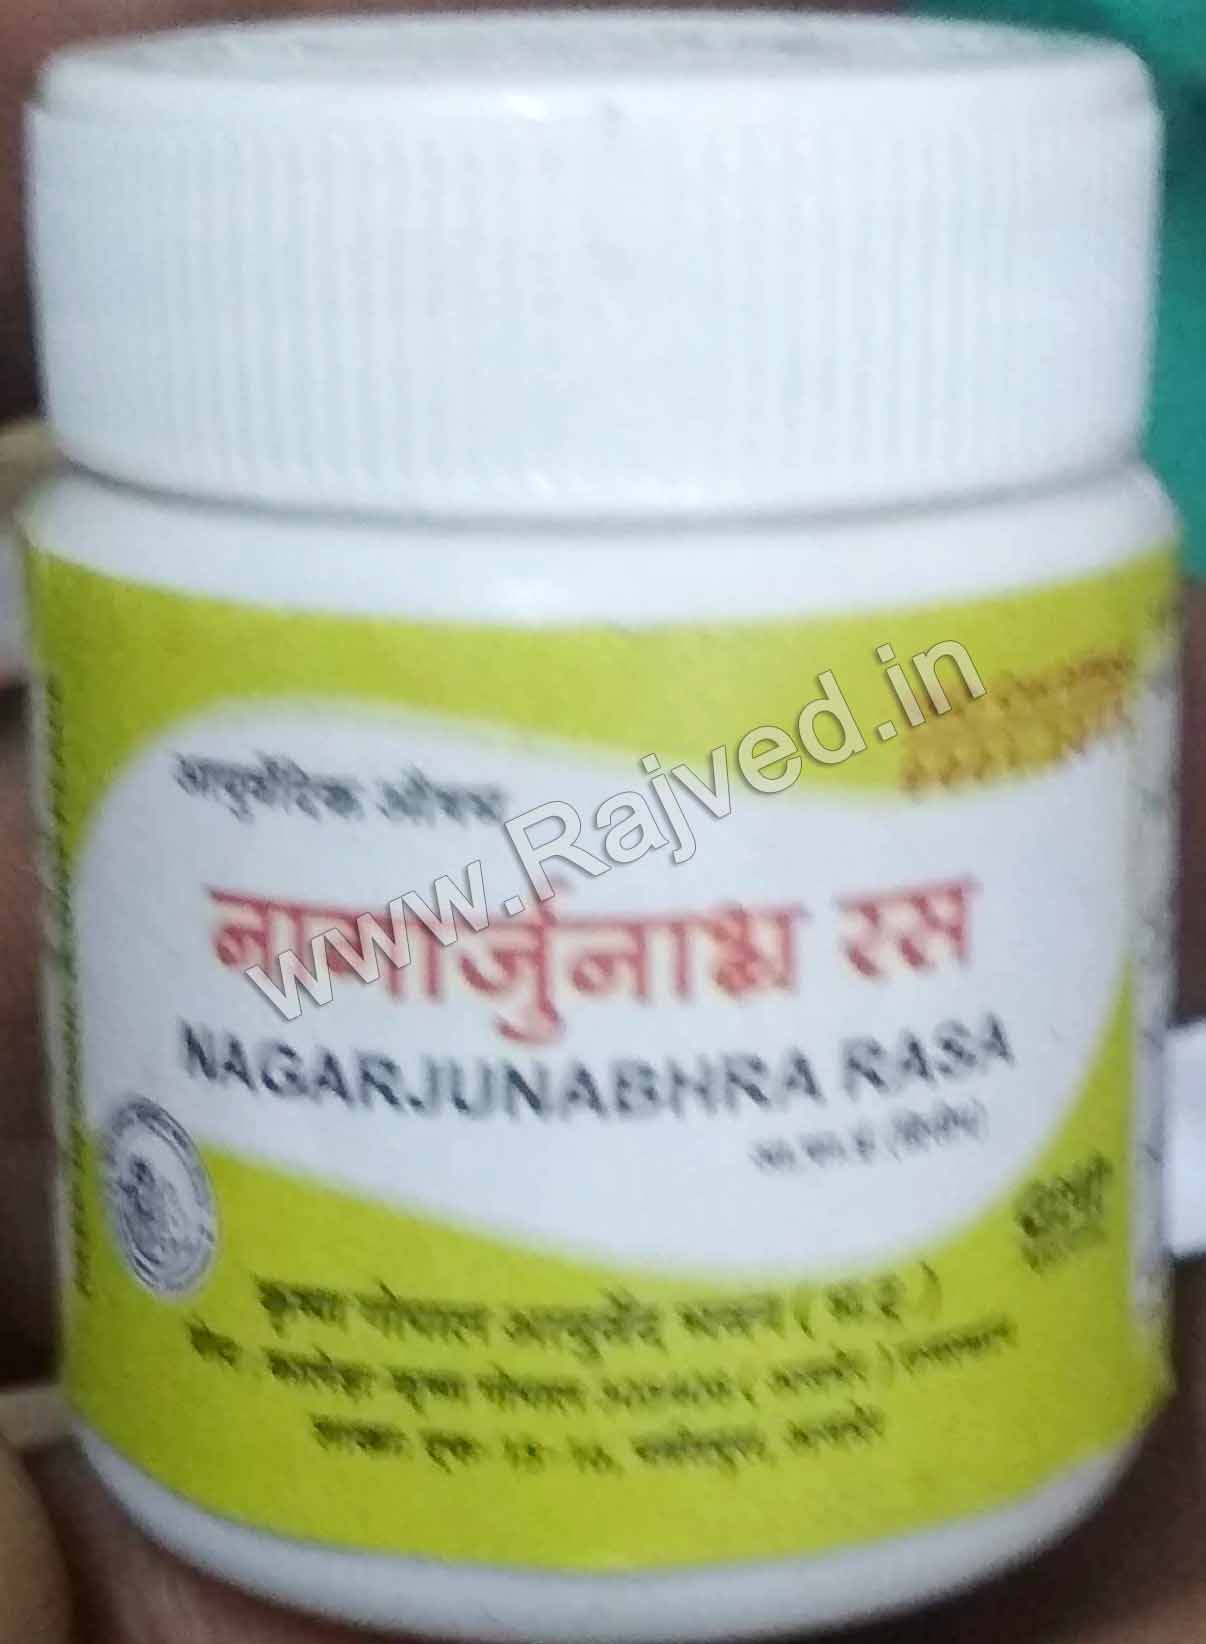 nagarjunabhra ras 10 gm upto 20% off krishna gopal ayurved bhavan